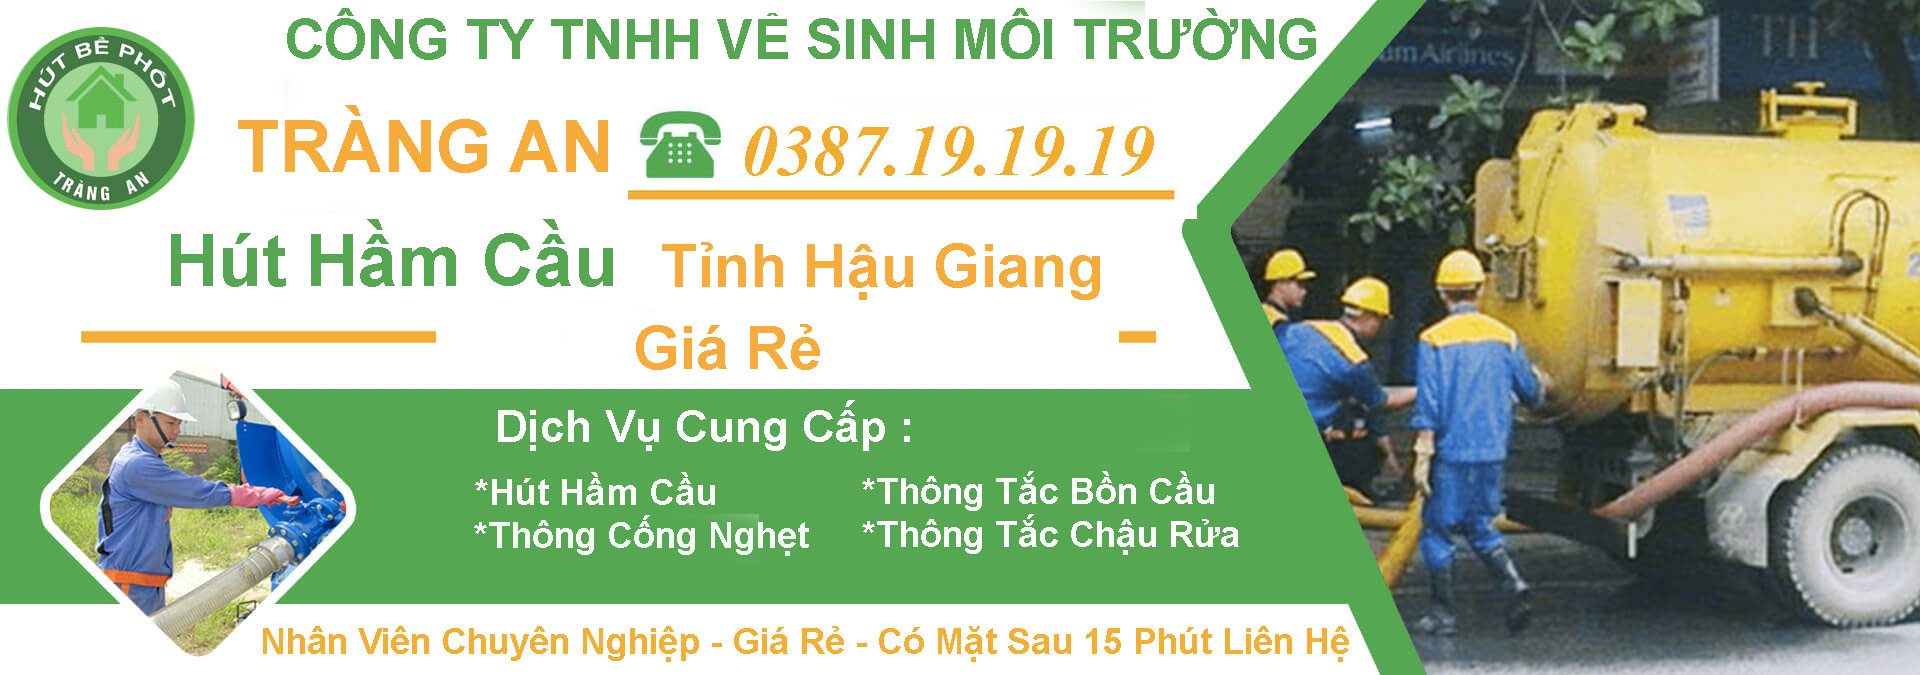 Hut Ham Cau Hau Giang